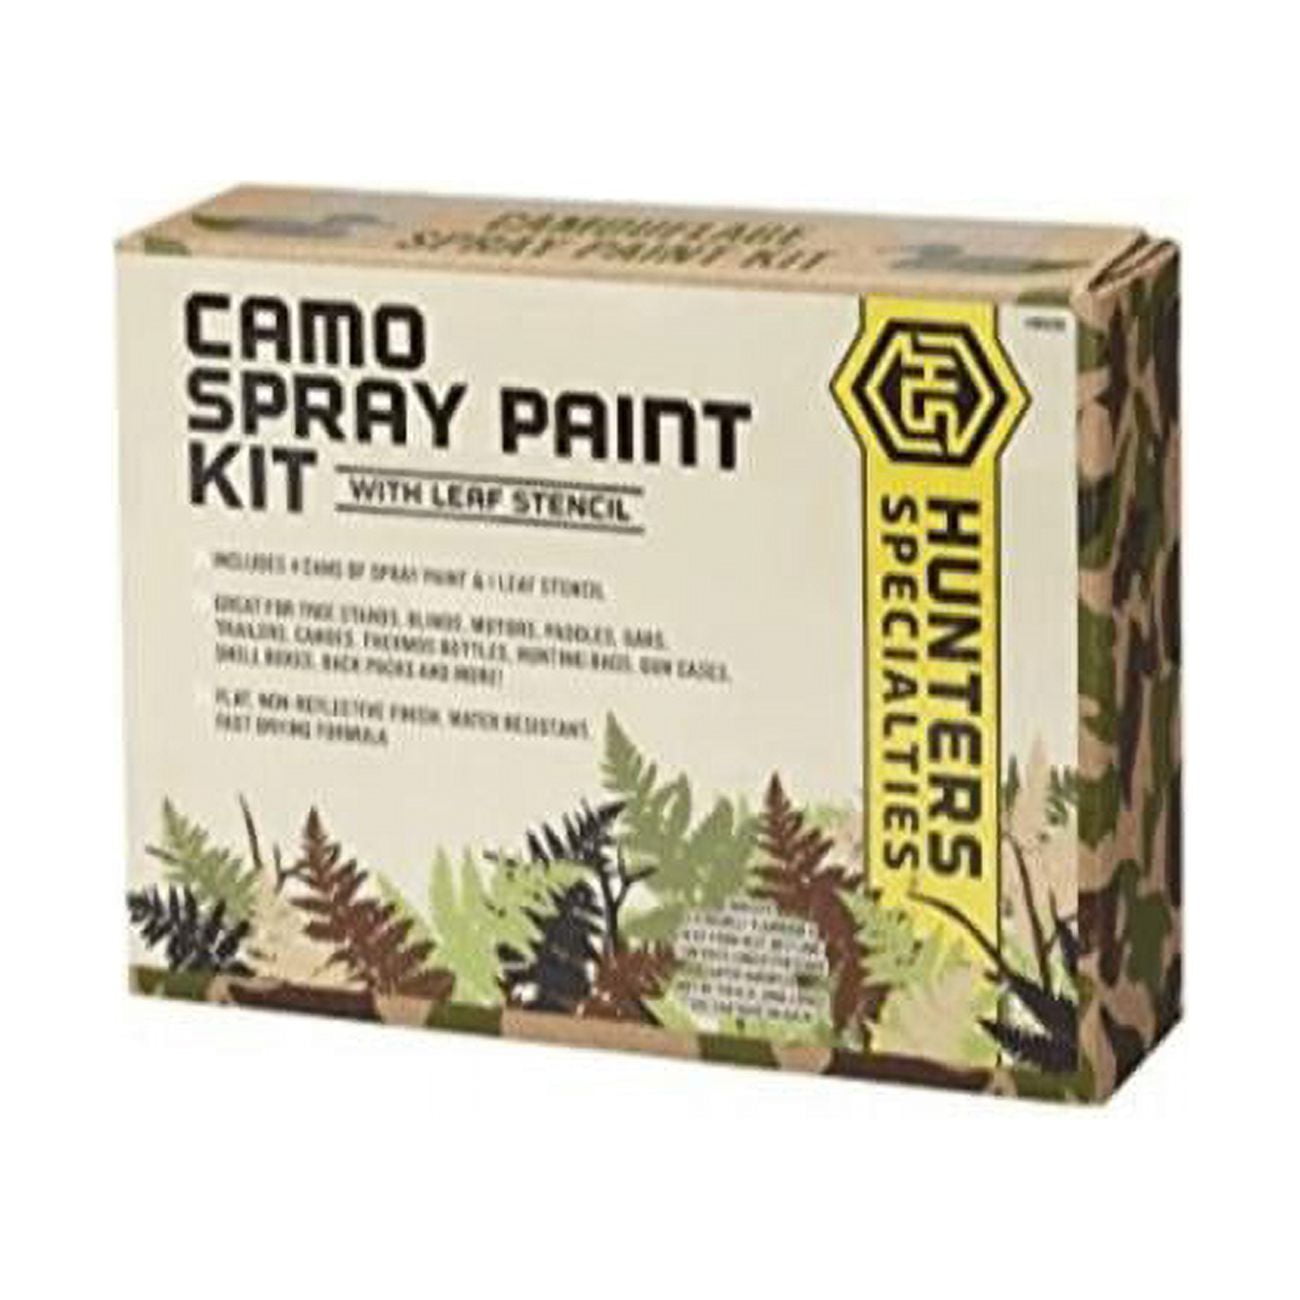 Camo Spray Paint Kit with Leaf Stencil